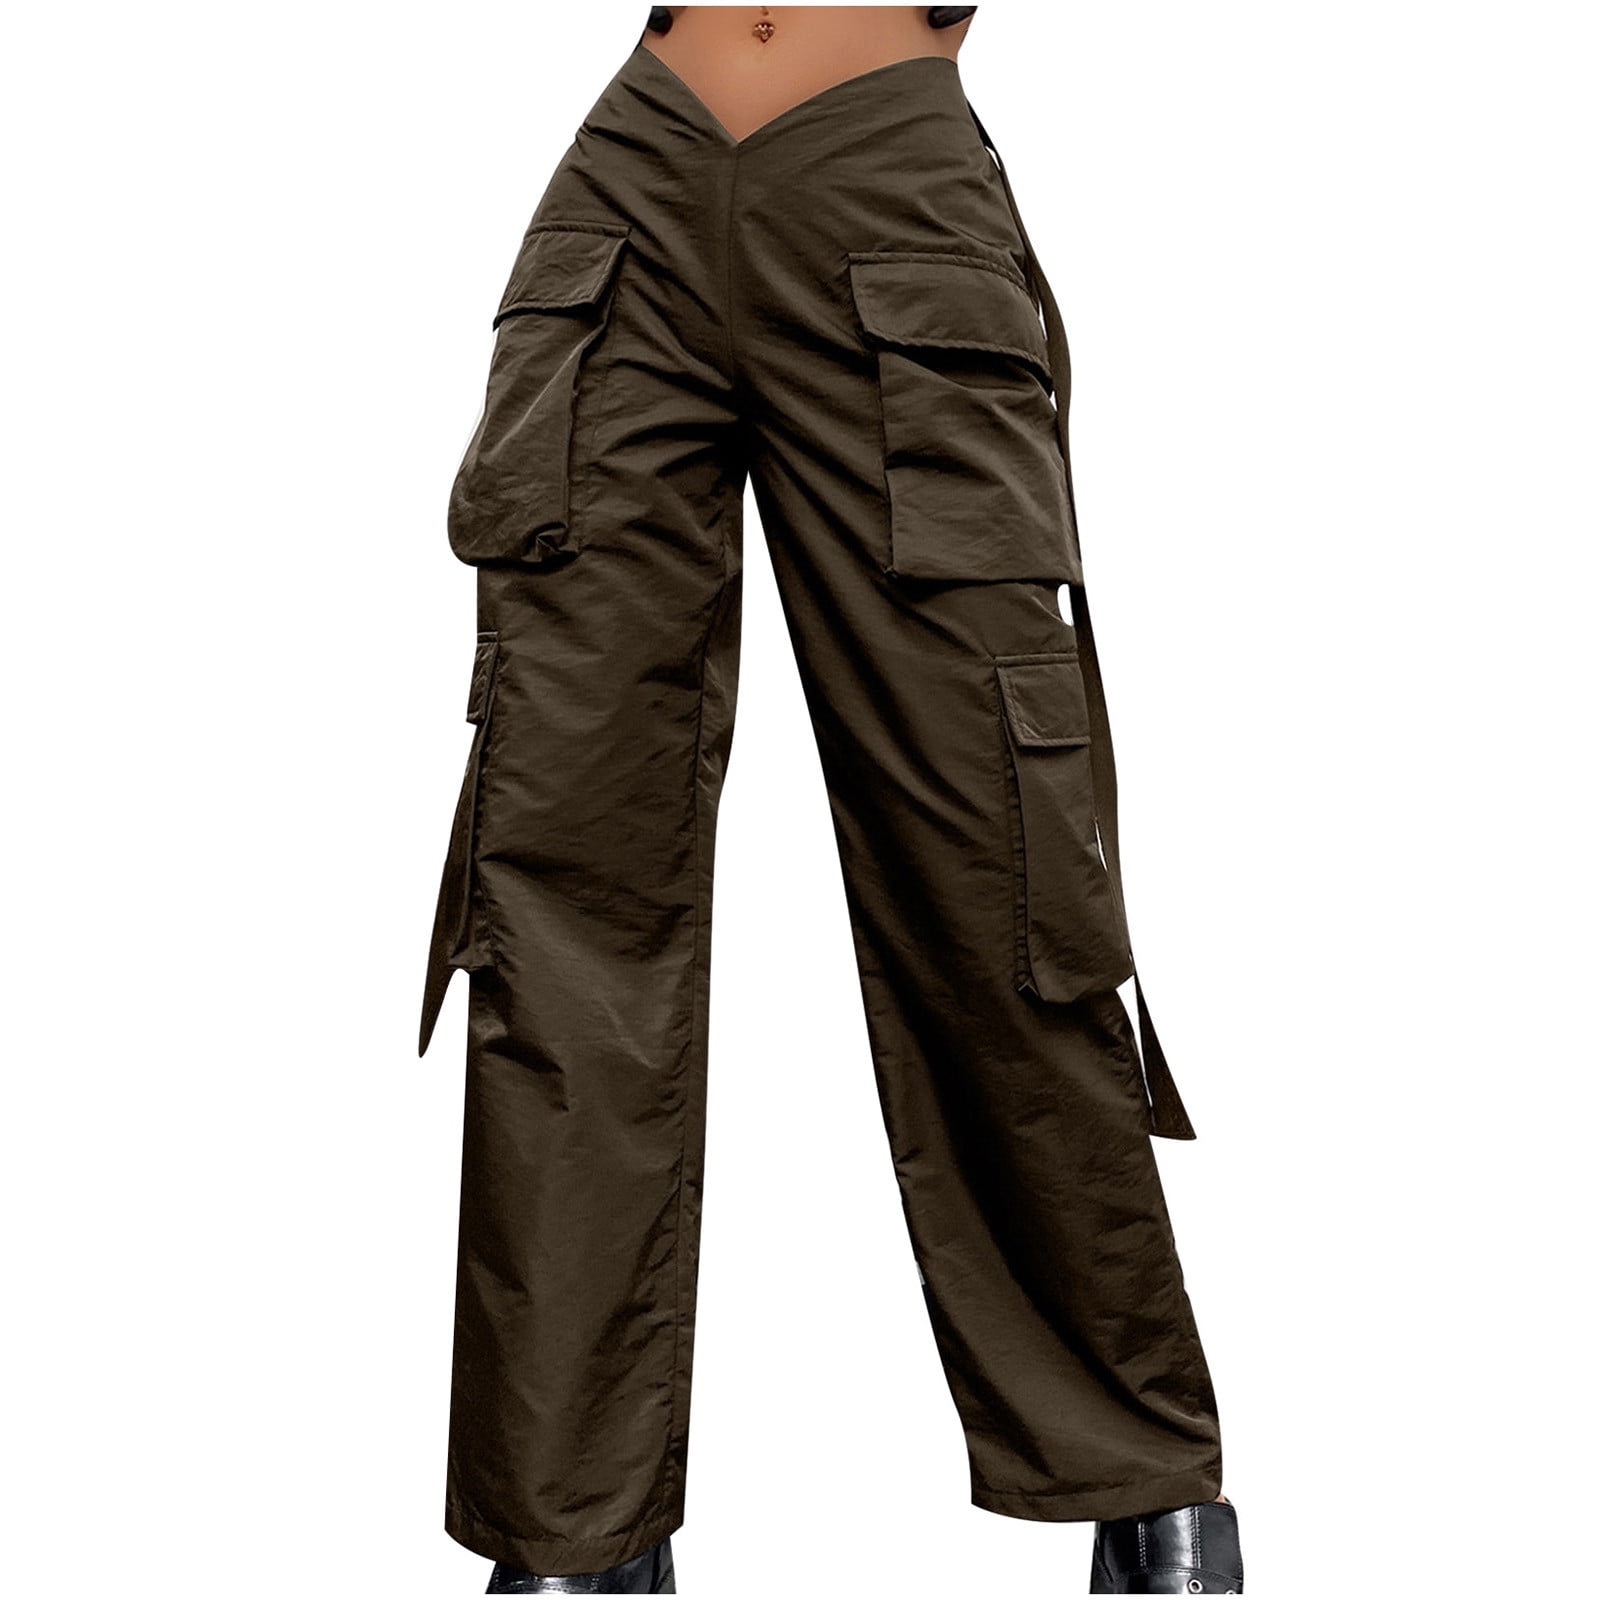 Airpow Clearance Cargo Pants Women's Street Style Fashion Design Sense  Multi Pocket Overalls Low Waist Sports Pants Brown XL